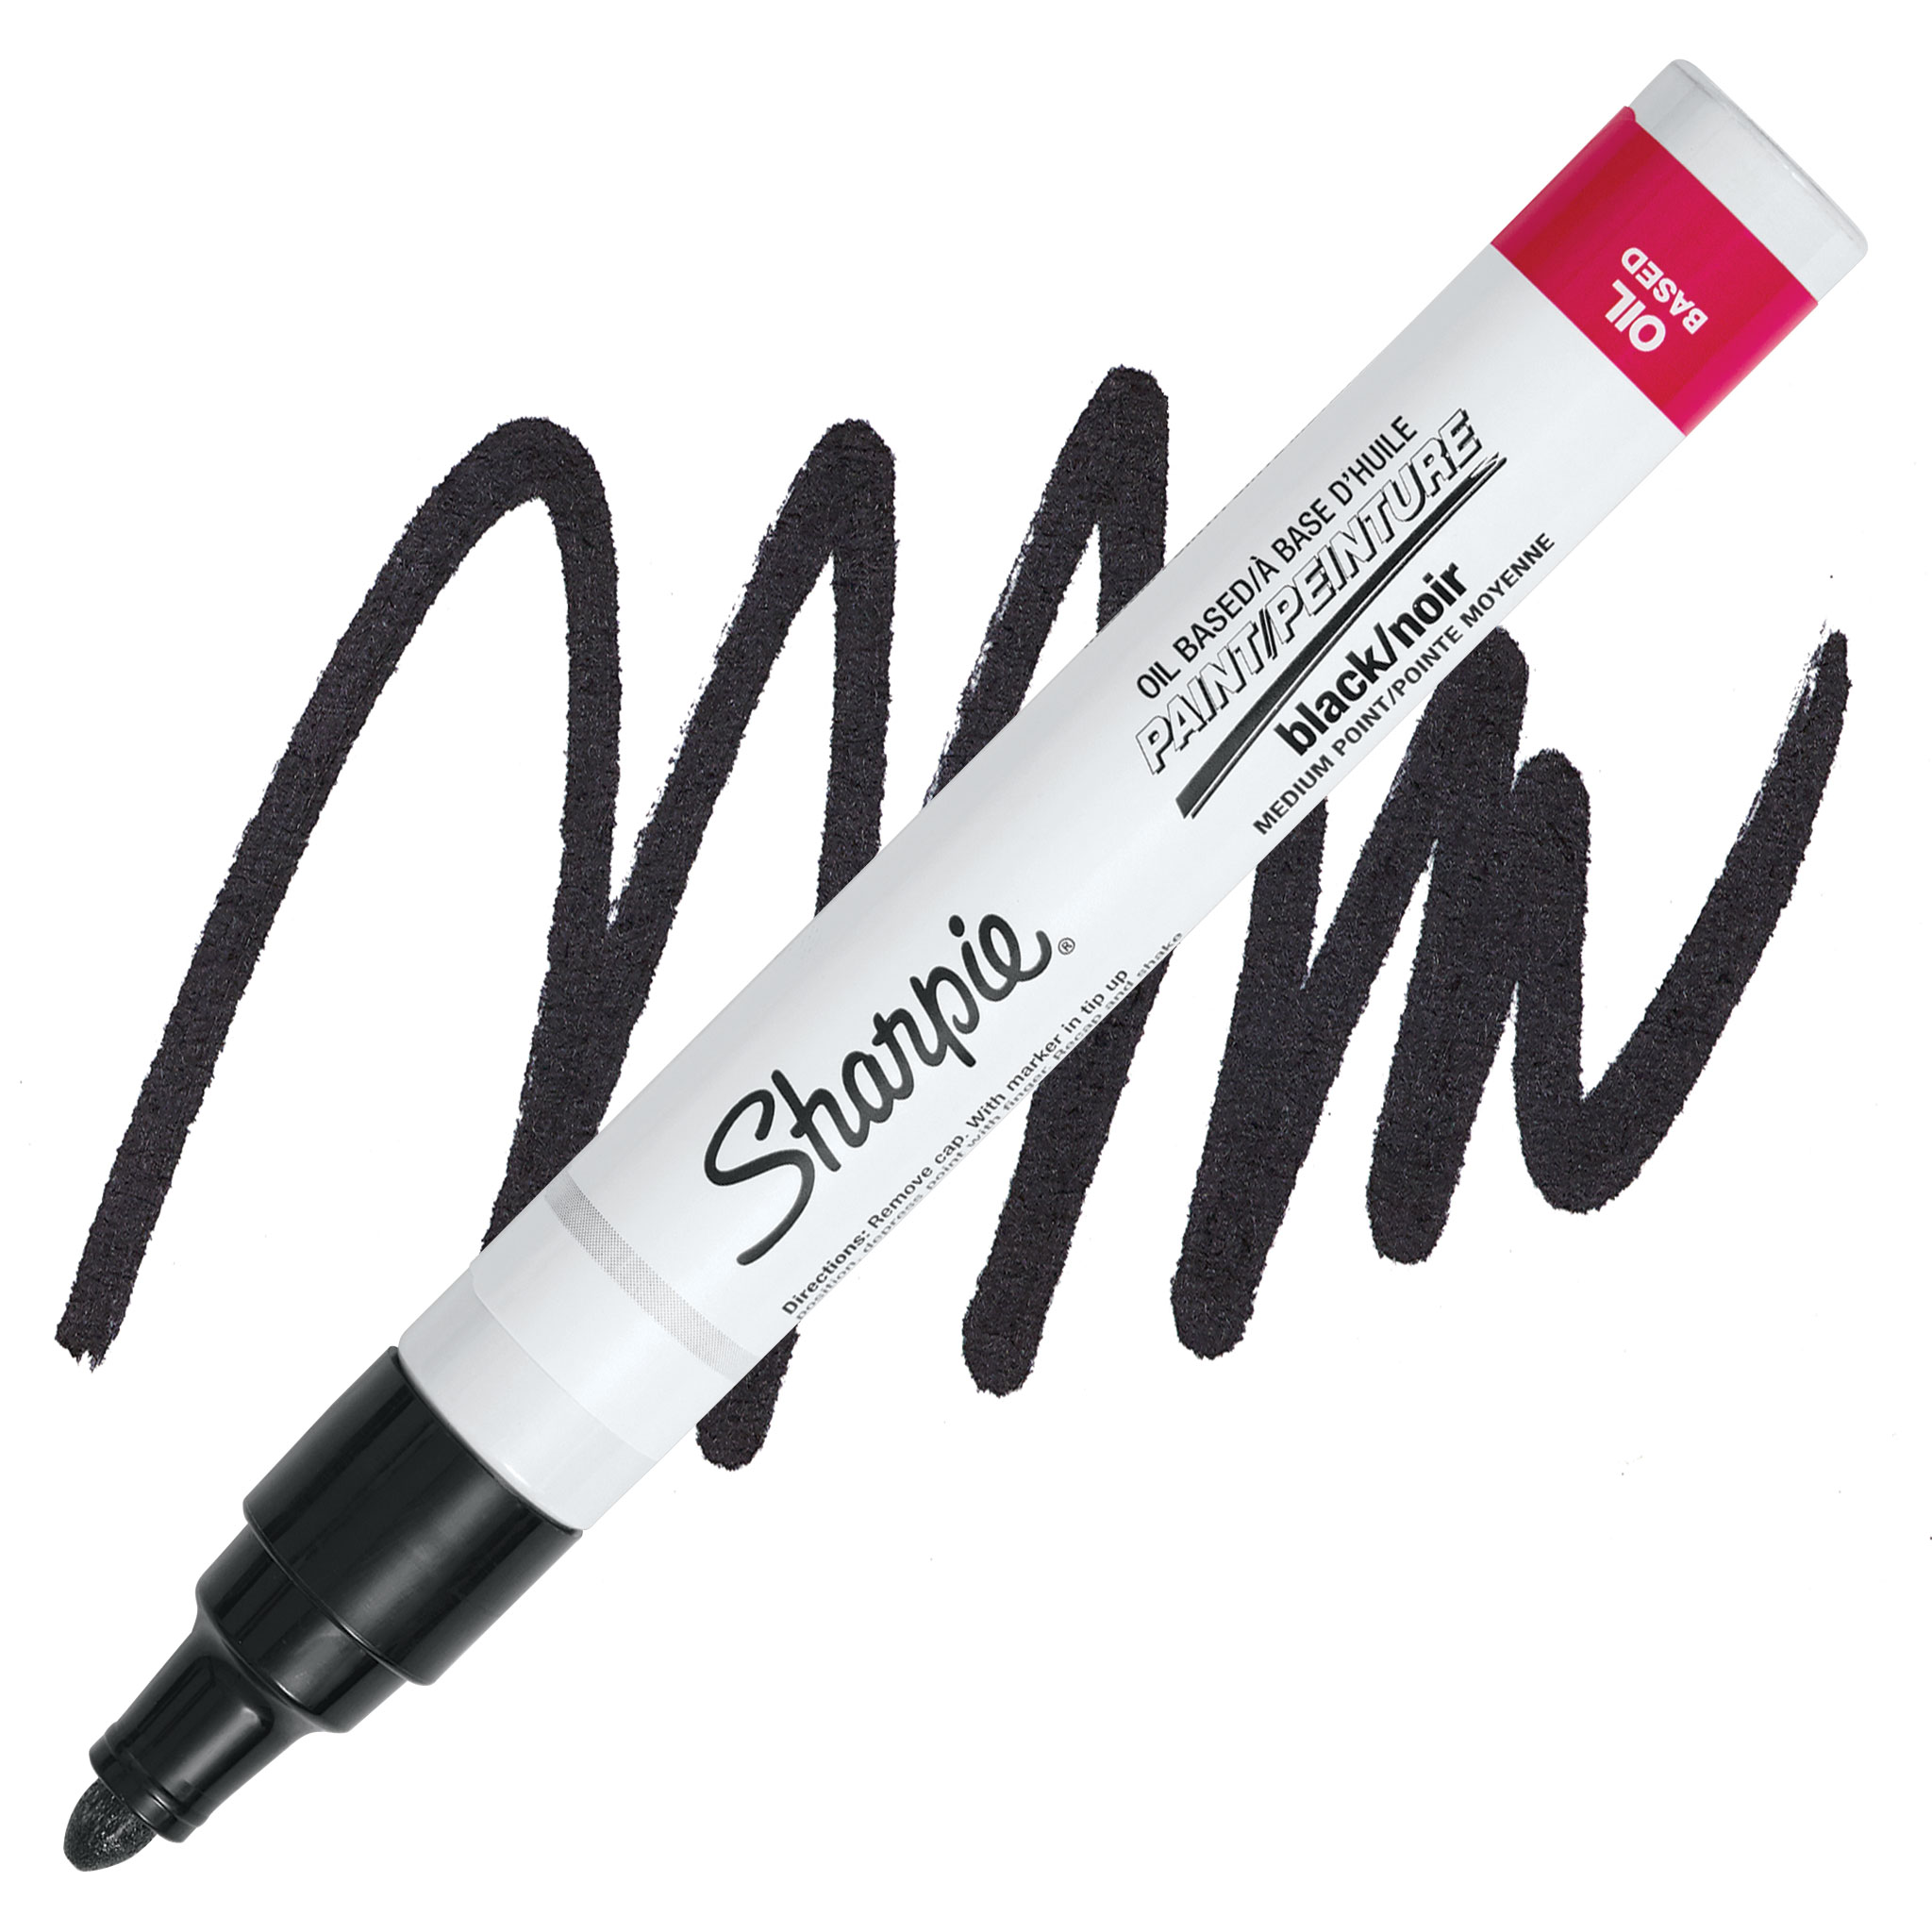 Sharpie® Medium Point Oil-Based Paint Marker Set